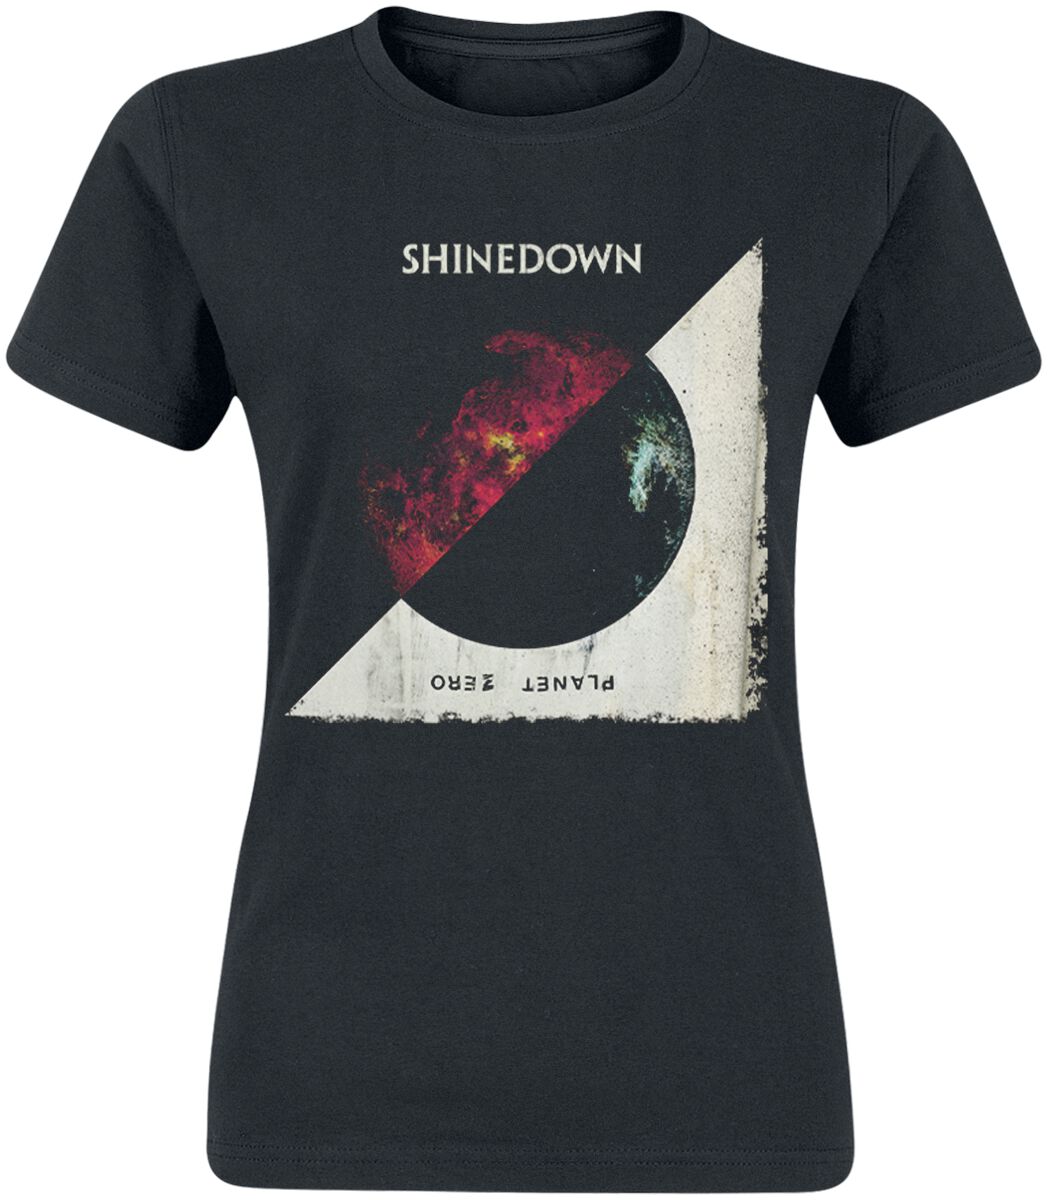 Shinedown Planet Zero T-Shirt black